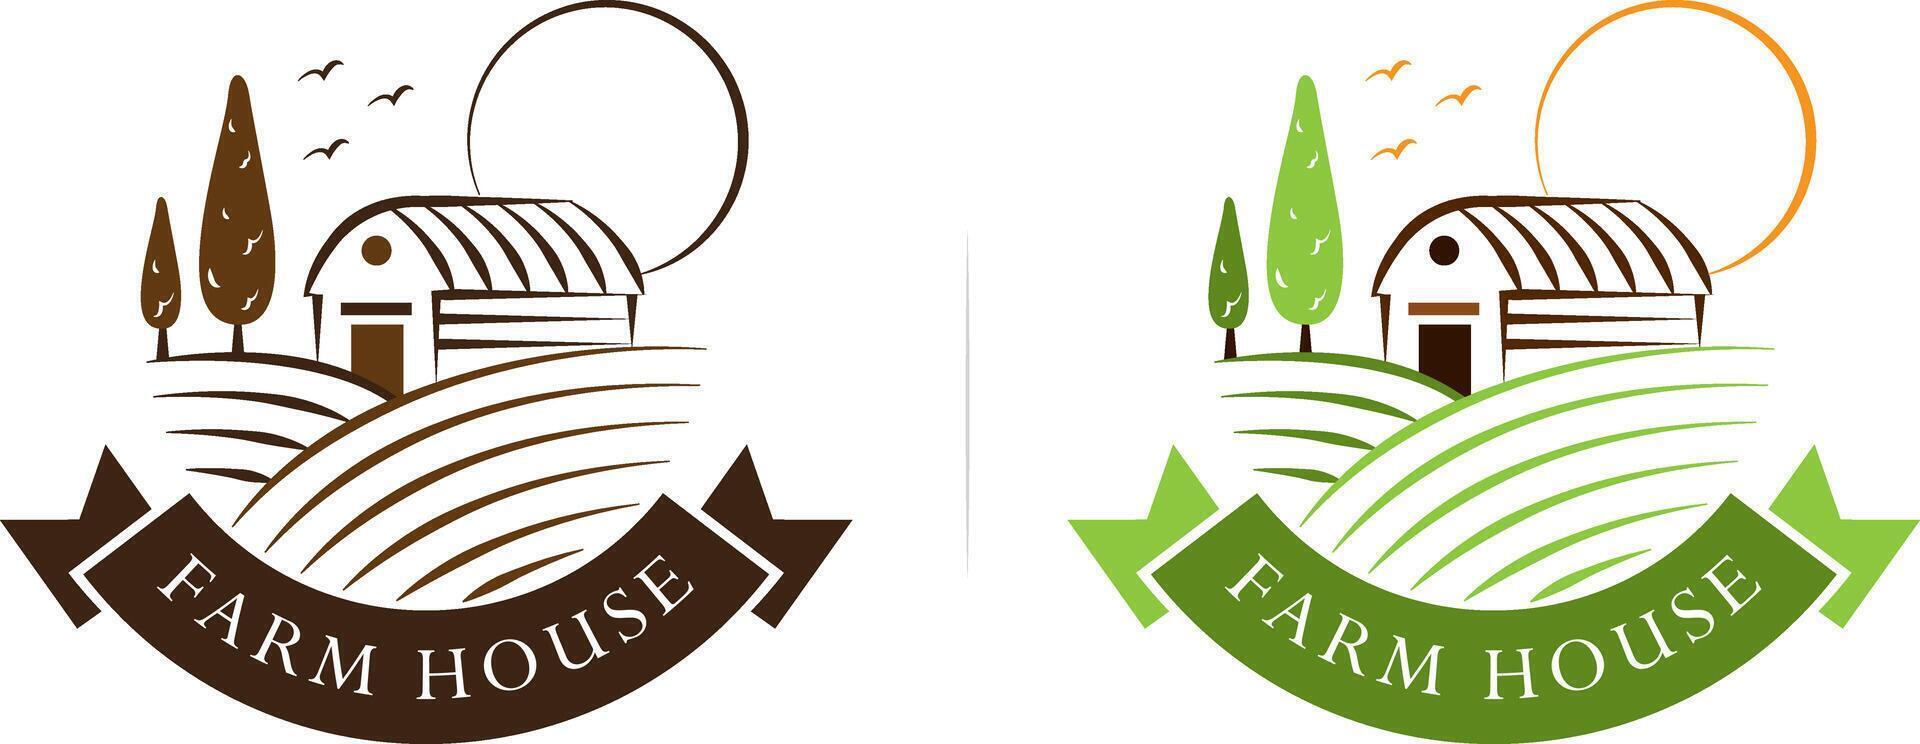 farm house logo in engraved style vector illustration